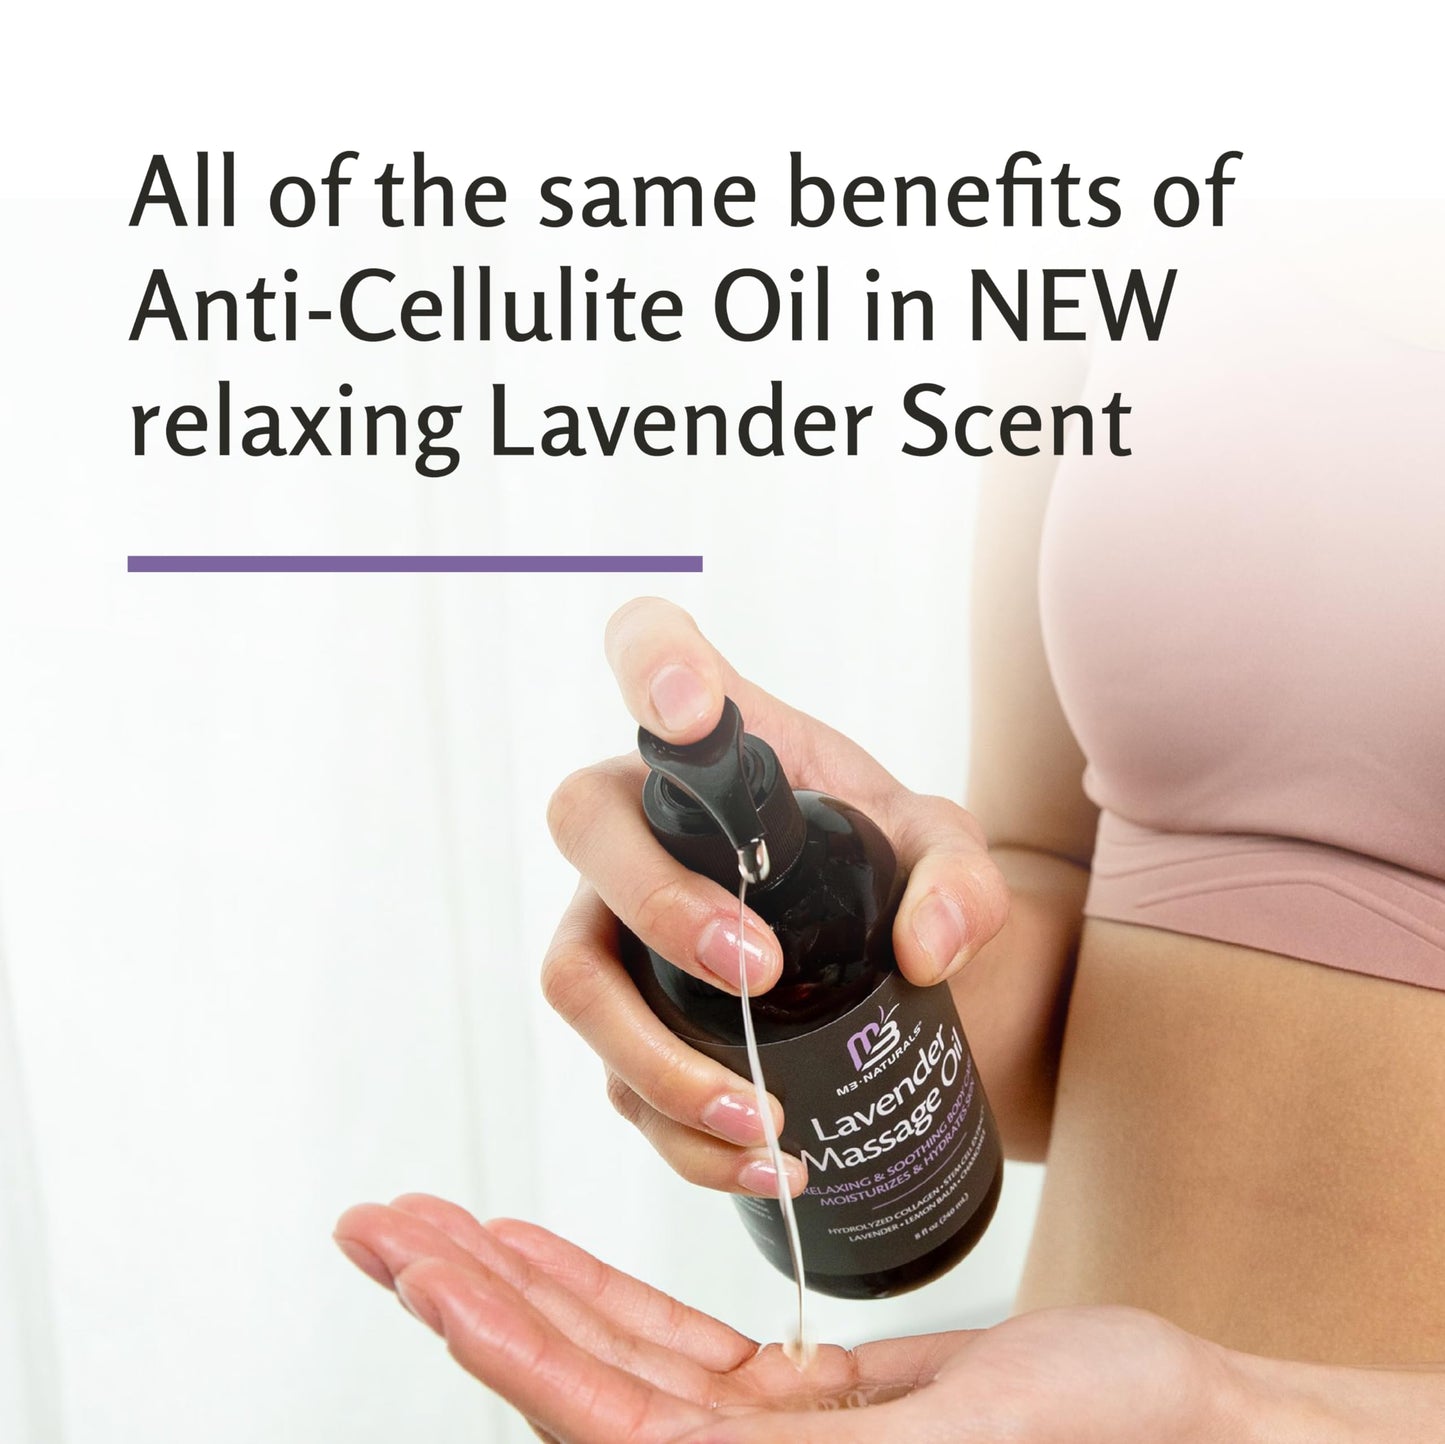 Lavender Massage Oil with Collagen and Stem Cells - Skin Tightening Massage